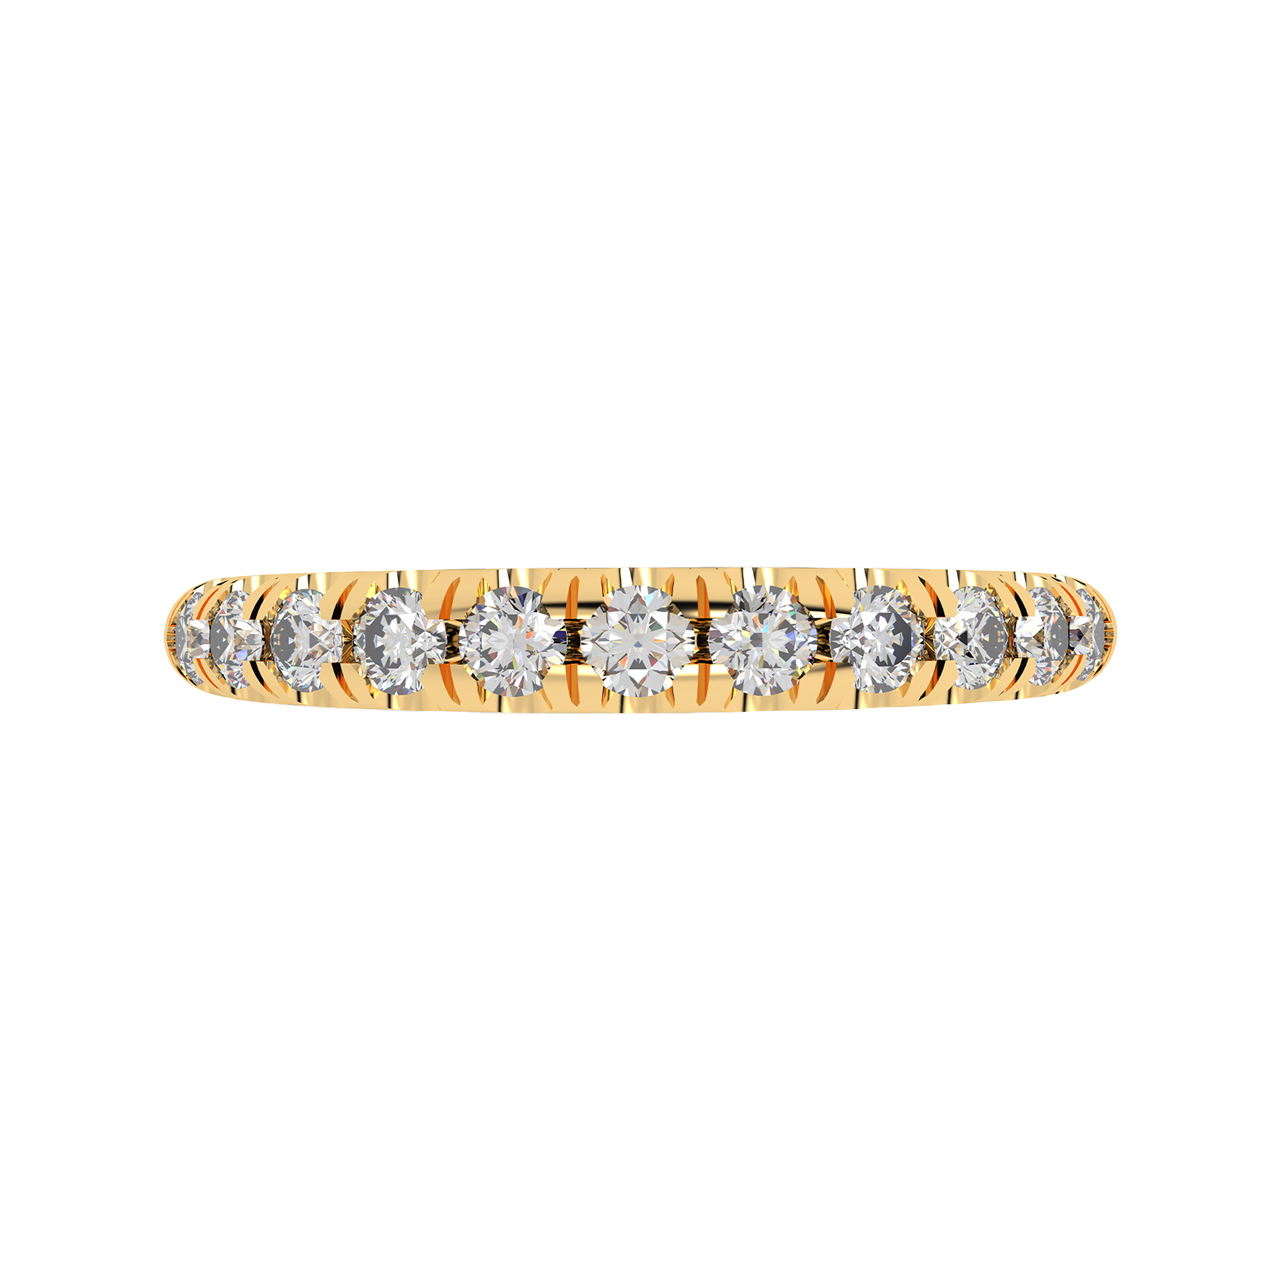 Linear Design Diamond Ring